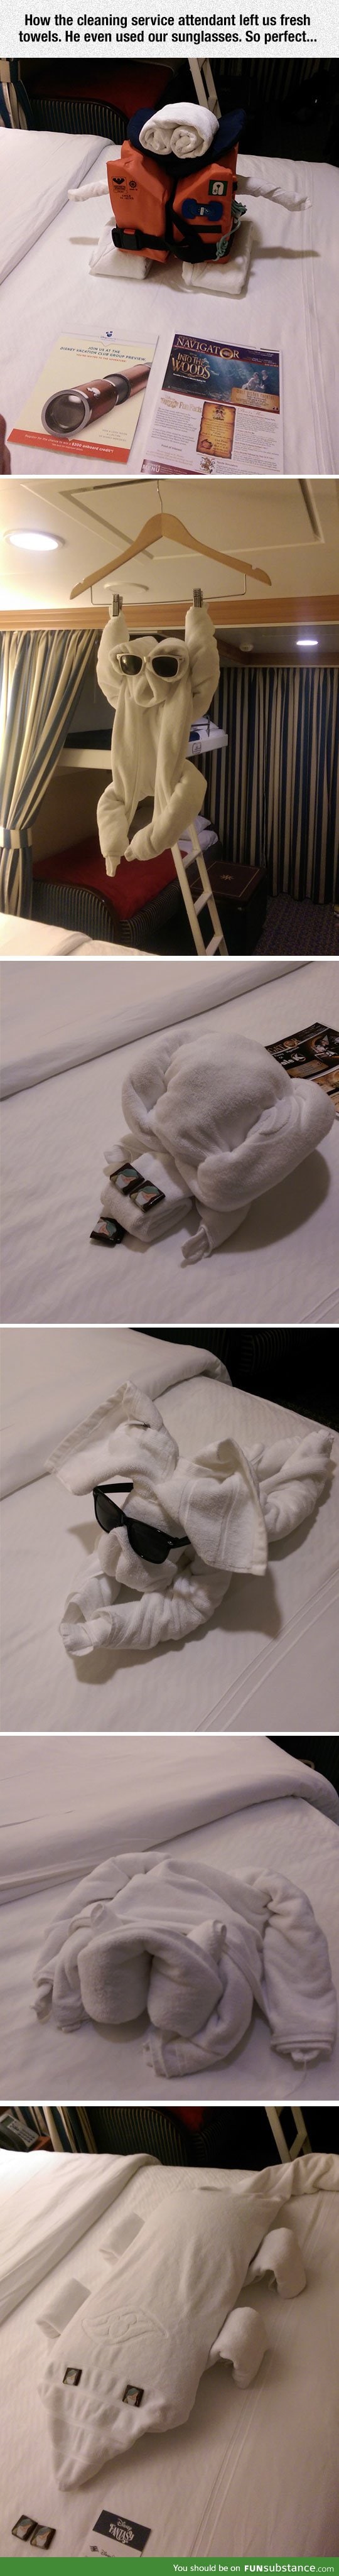 Creative ways to fold towels